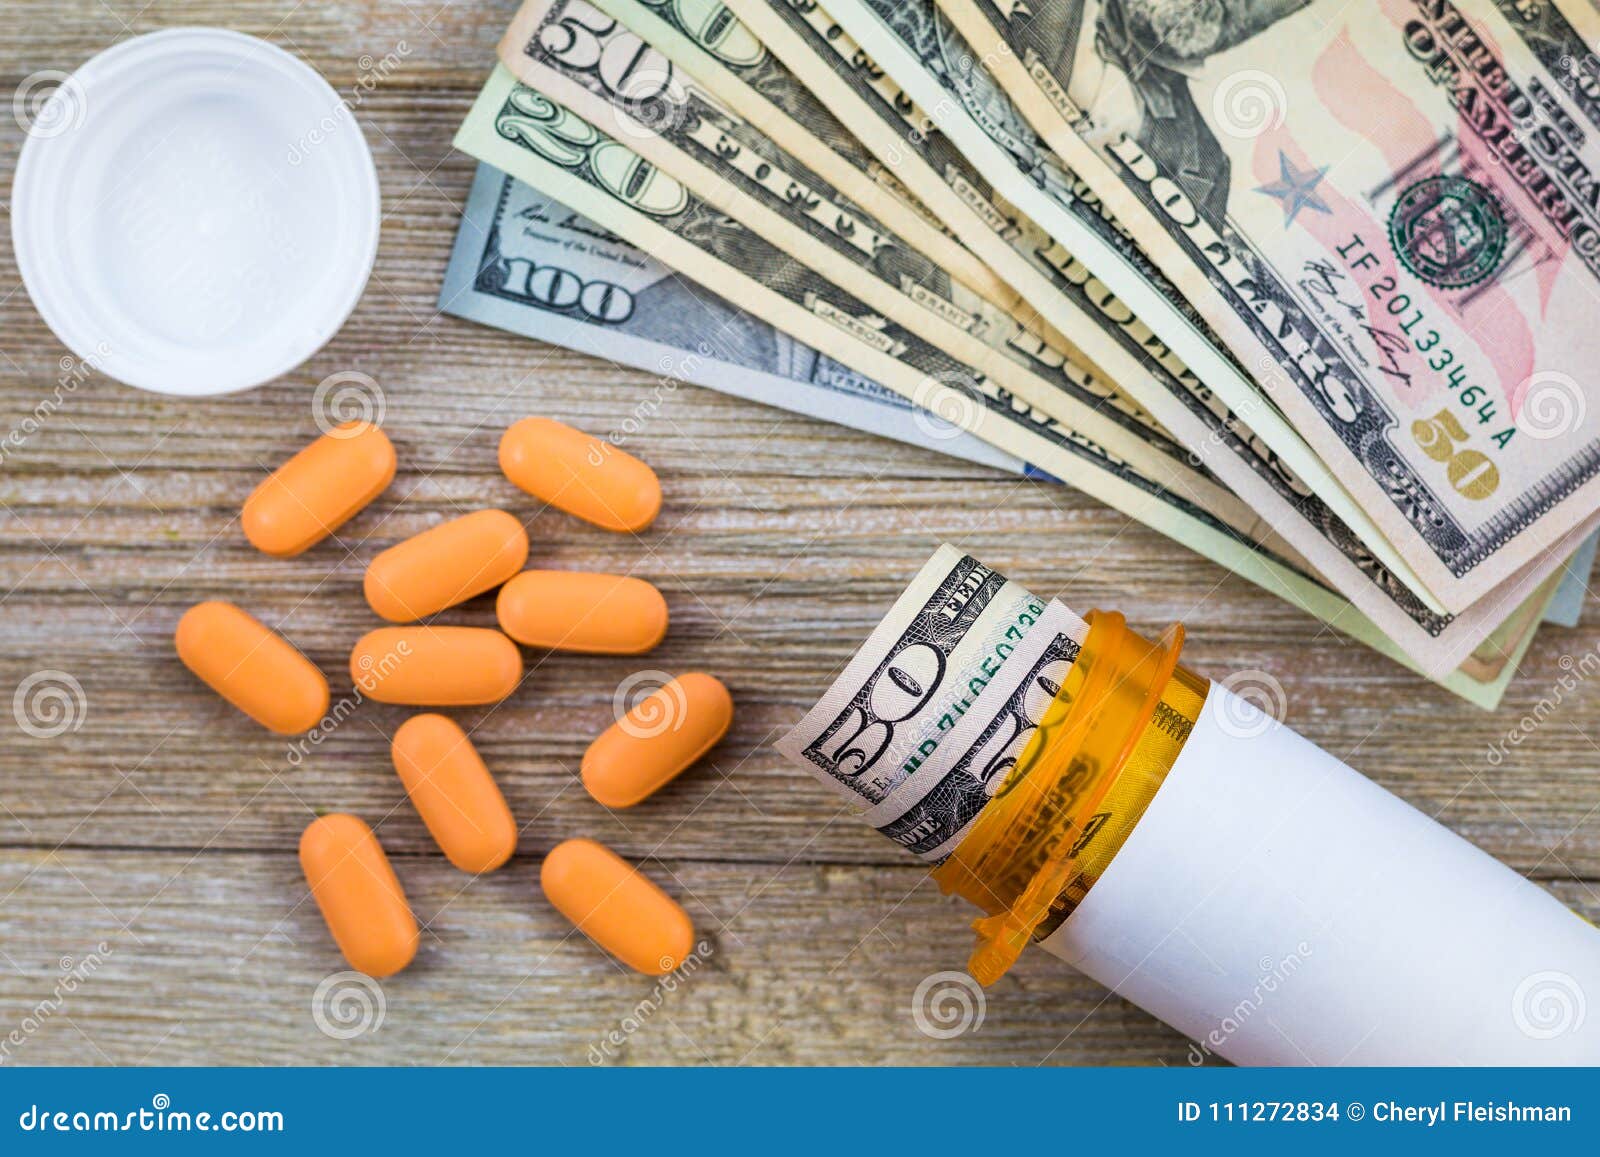 prescription medicine on dollars for pharmaceutical industry concept